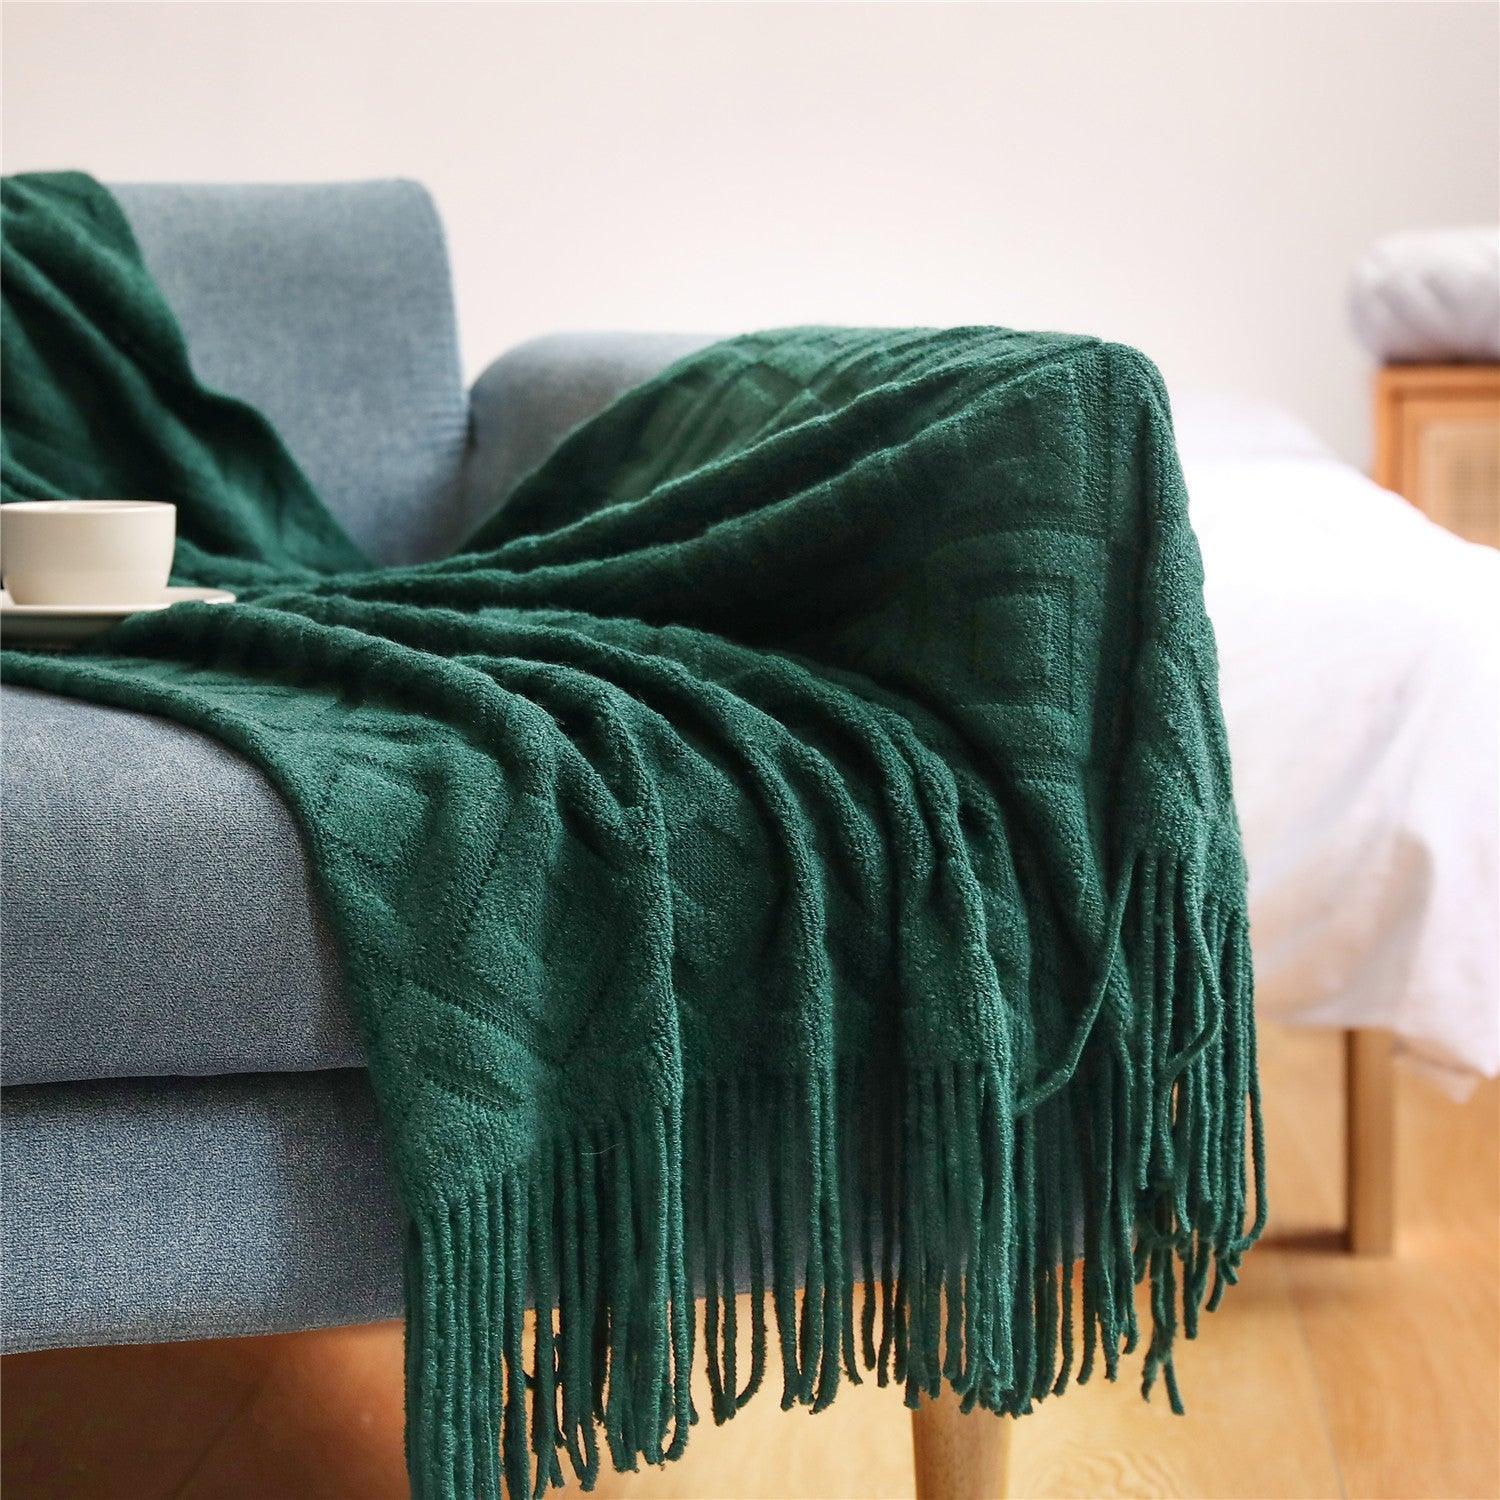 Summer Office Air Conditioning Nap Blanket KnittingDark green 127x152 